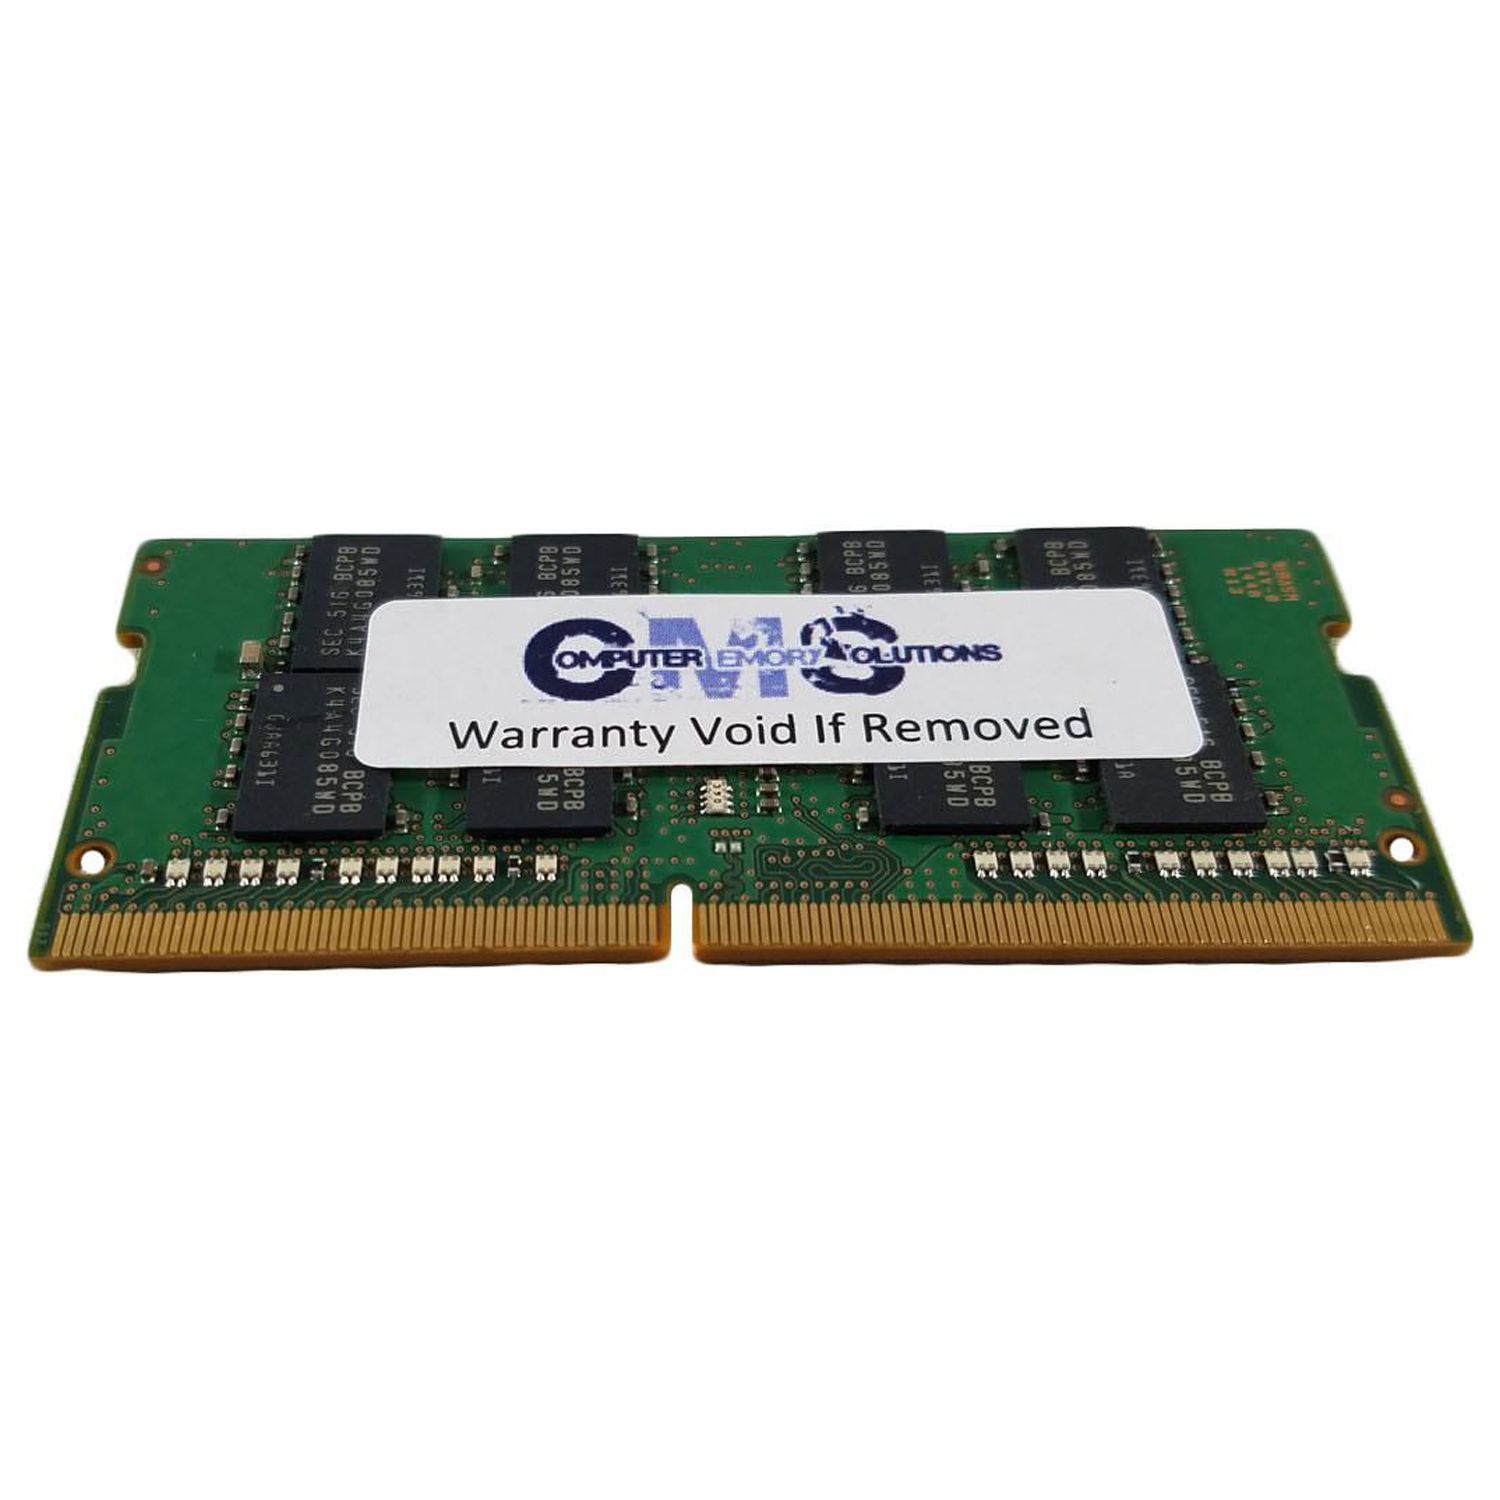 CMS 16GB (1X16GB) DDR4 19200 2400MHZ NON ECC SODIMM Memory Ram Upgrade Compatible with Lenovo® ThinkPad T480s, ThinkPad Yoga 260, Lenovo® V330 (15) - C107 - image 2 of 3